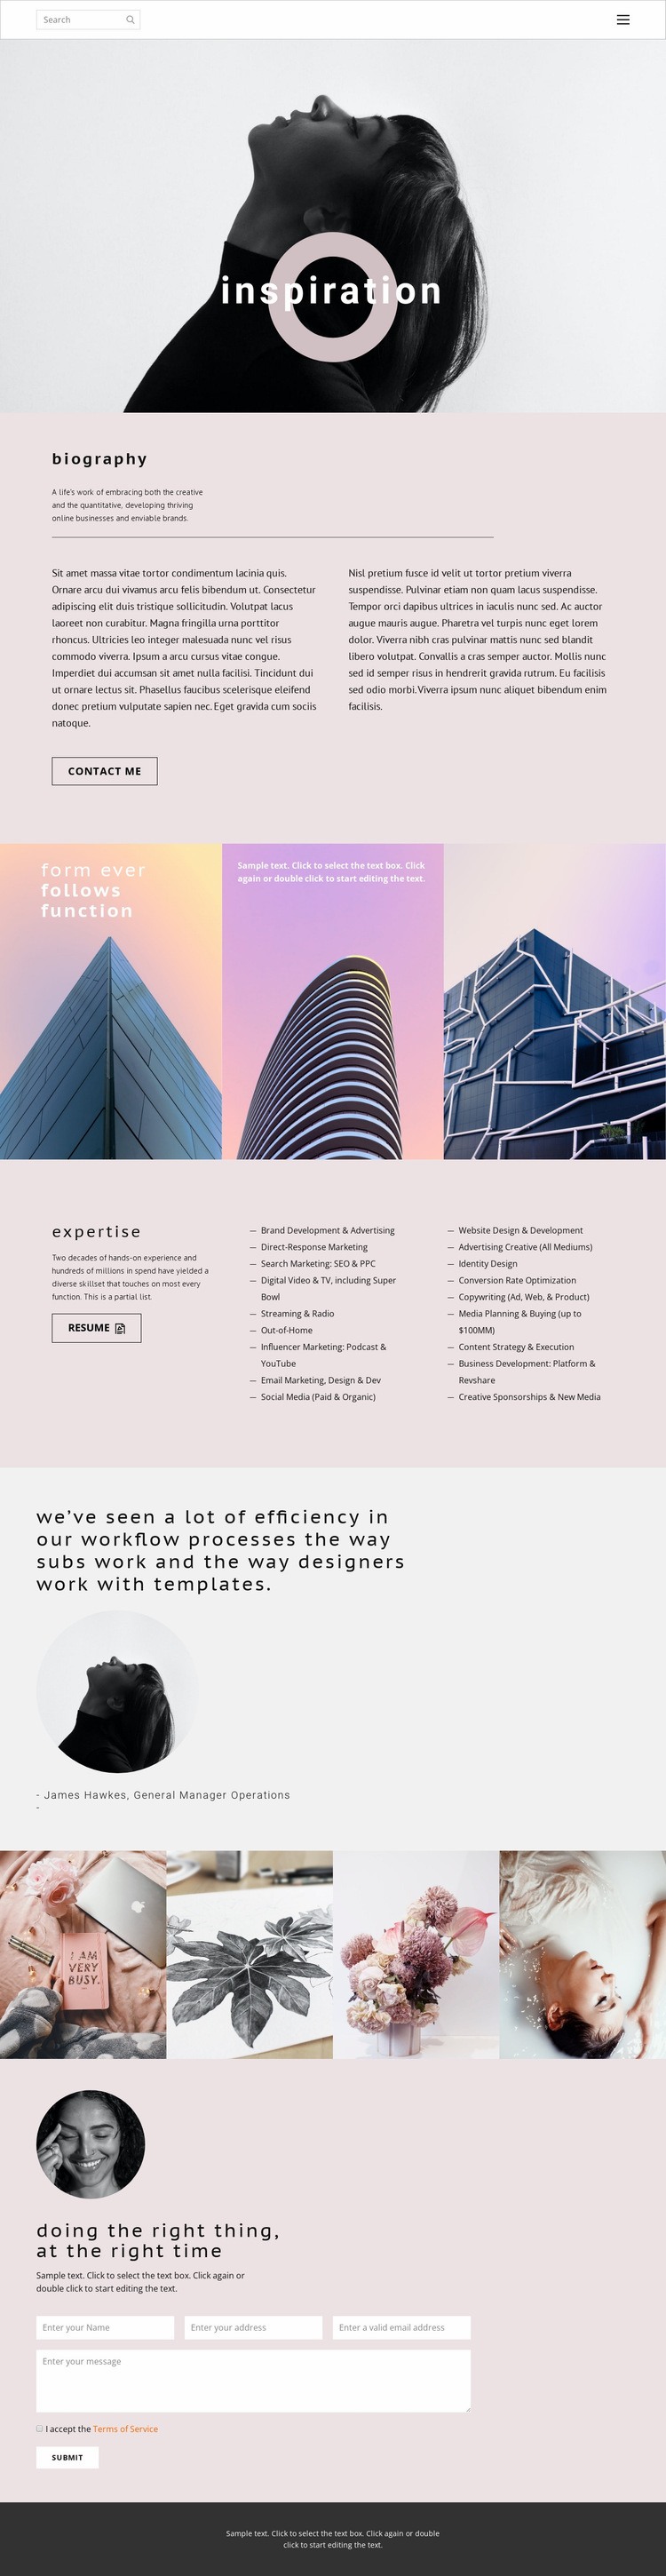 Inspiration advance Homepage Design